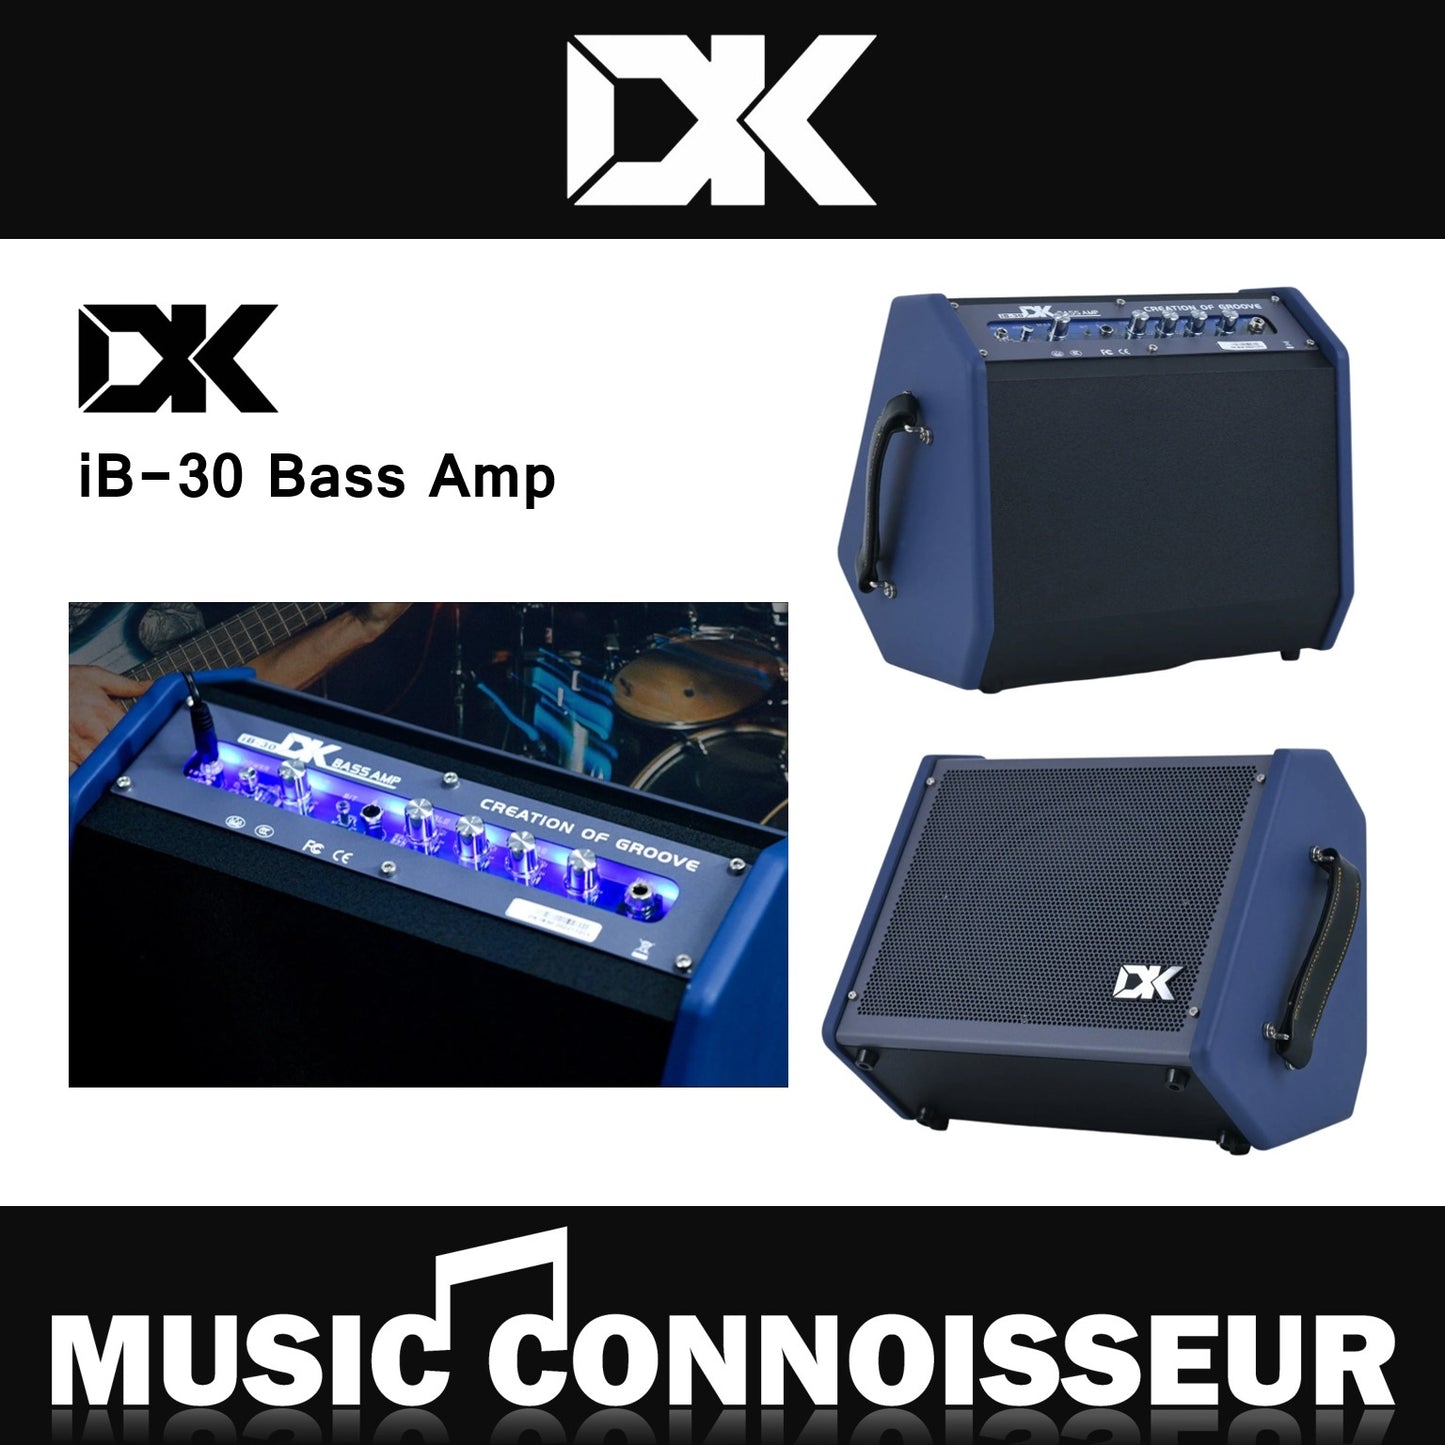 DK iB-30 Bass Amp